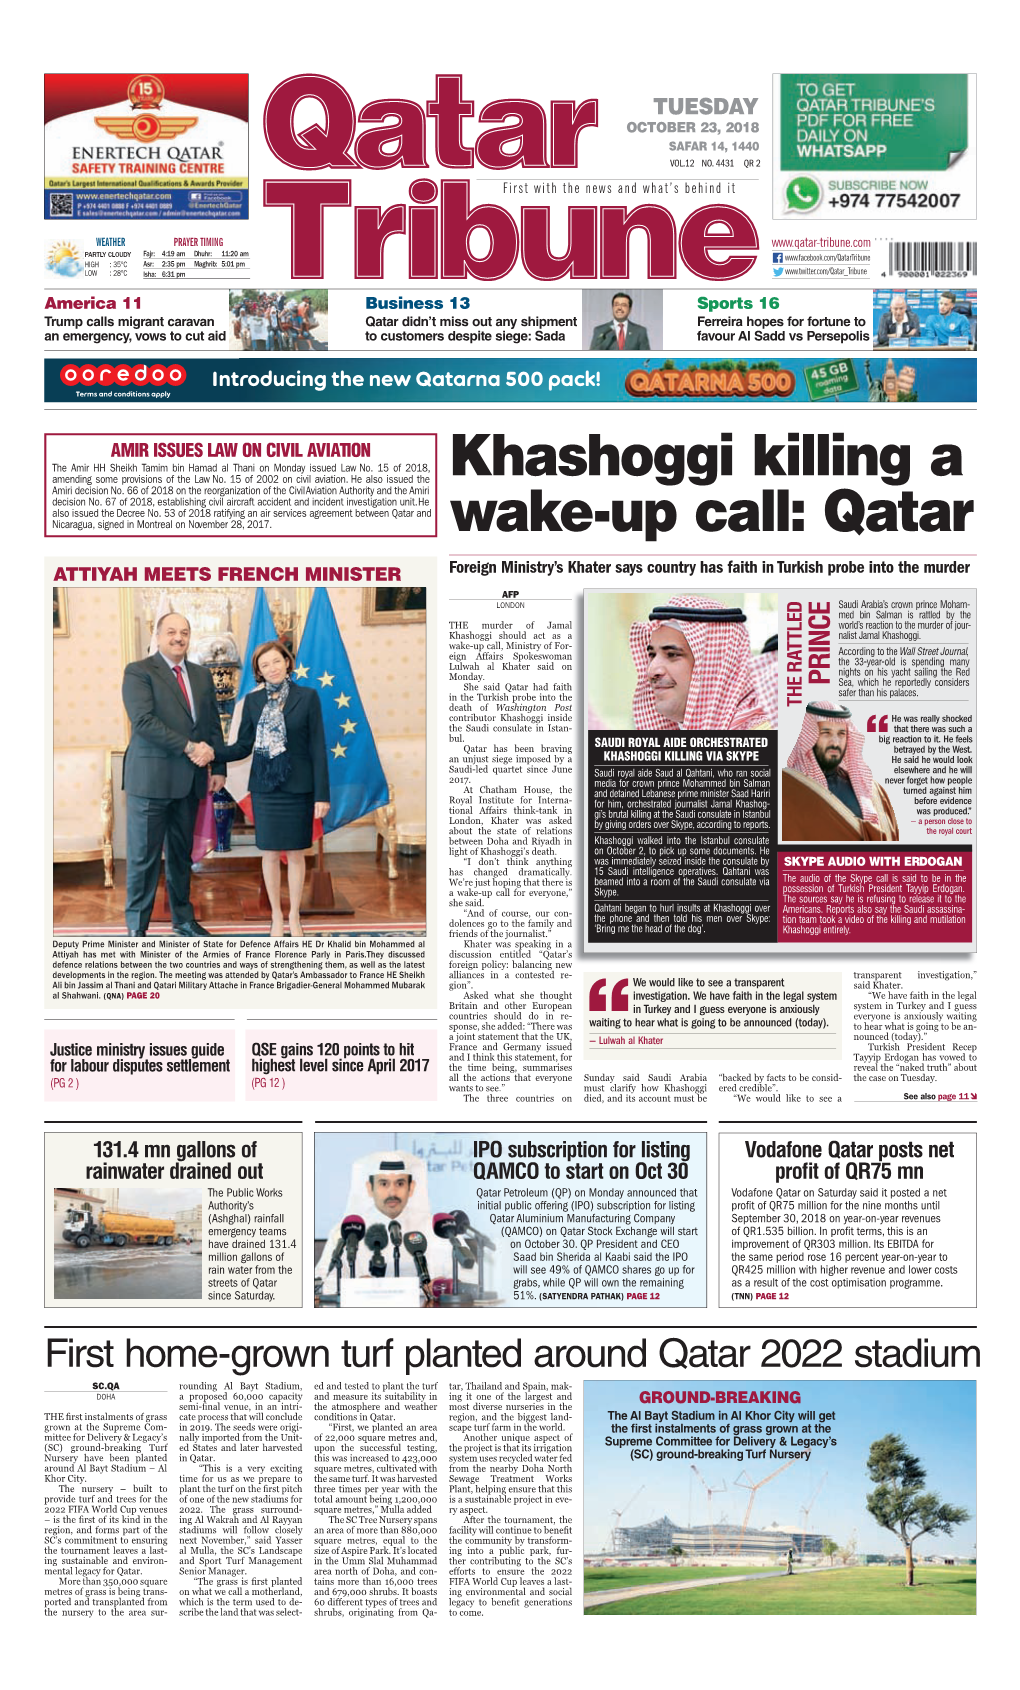 Khashoggi Killing a Wake-Up Call